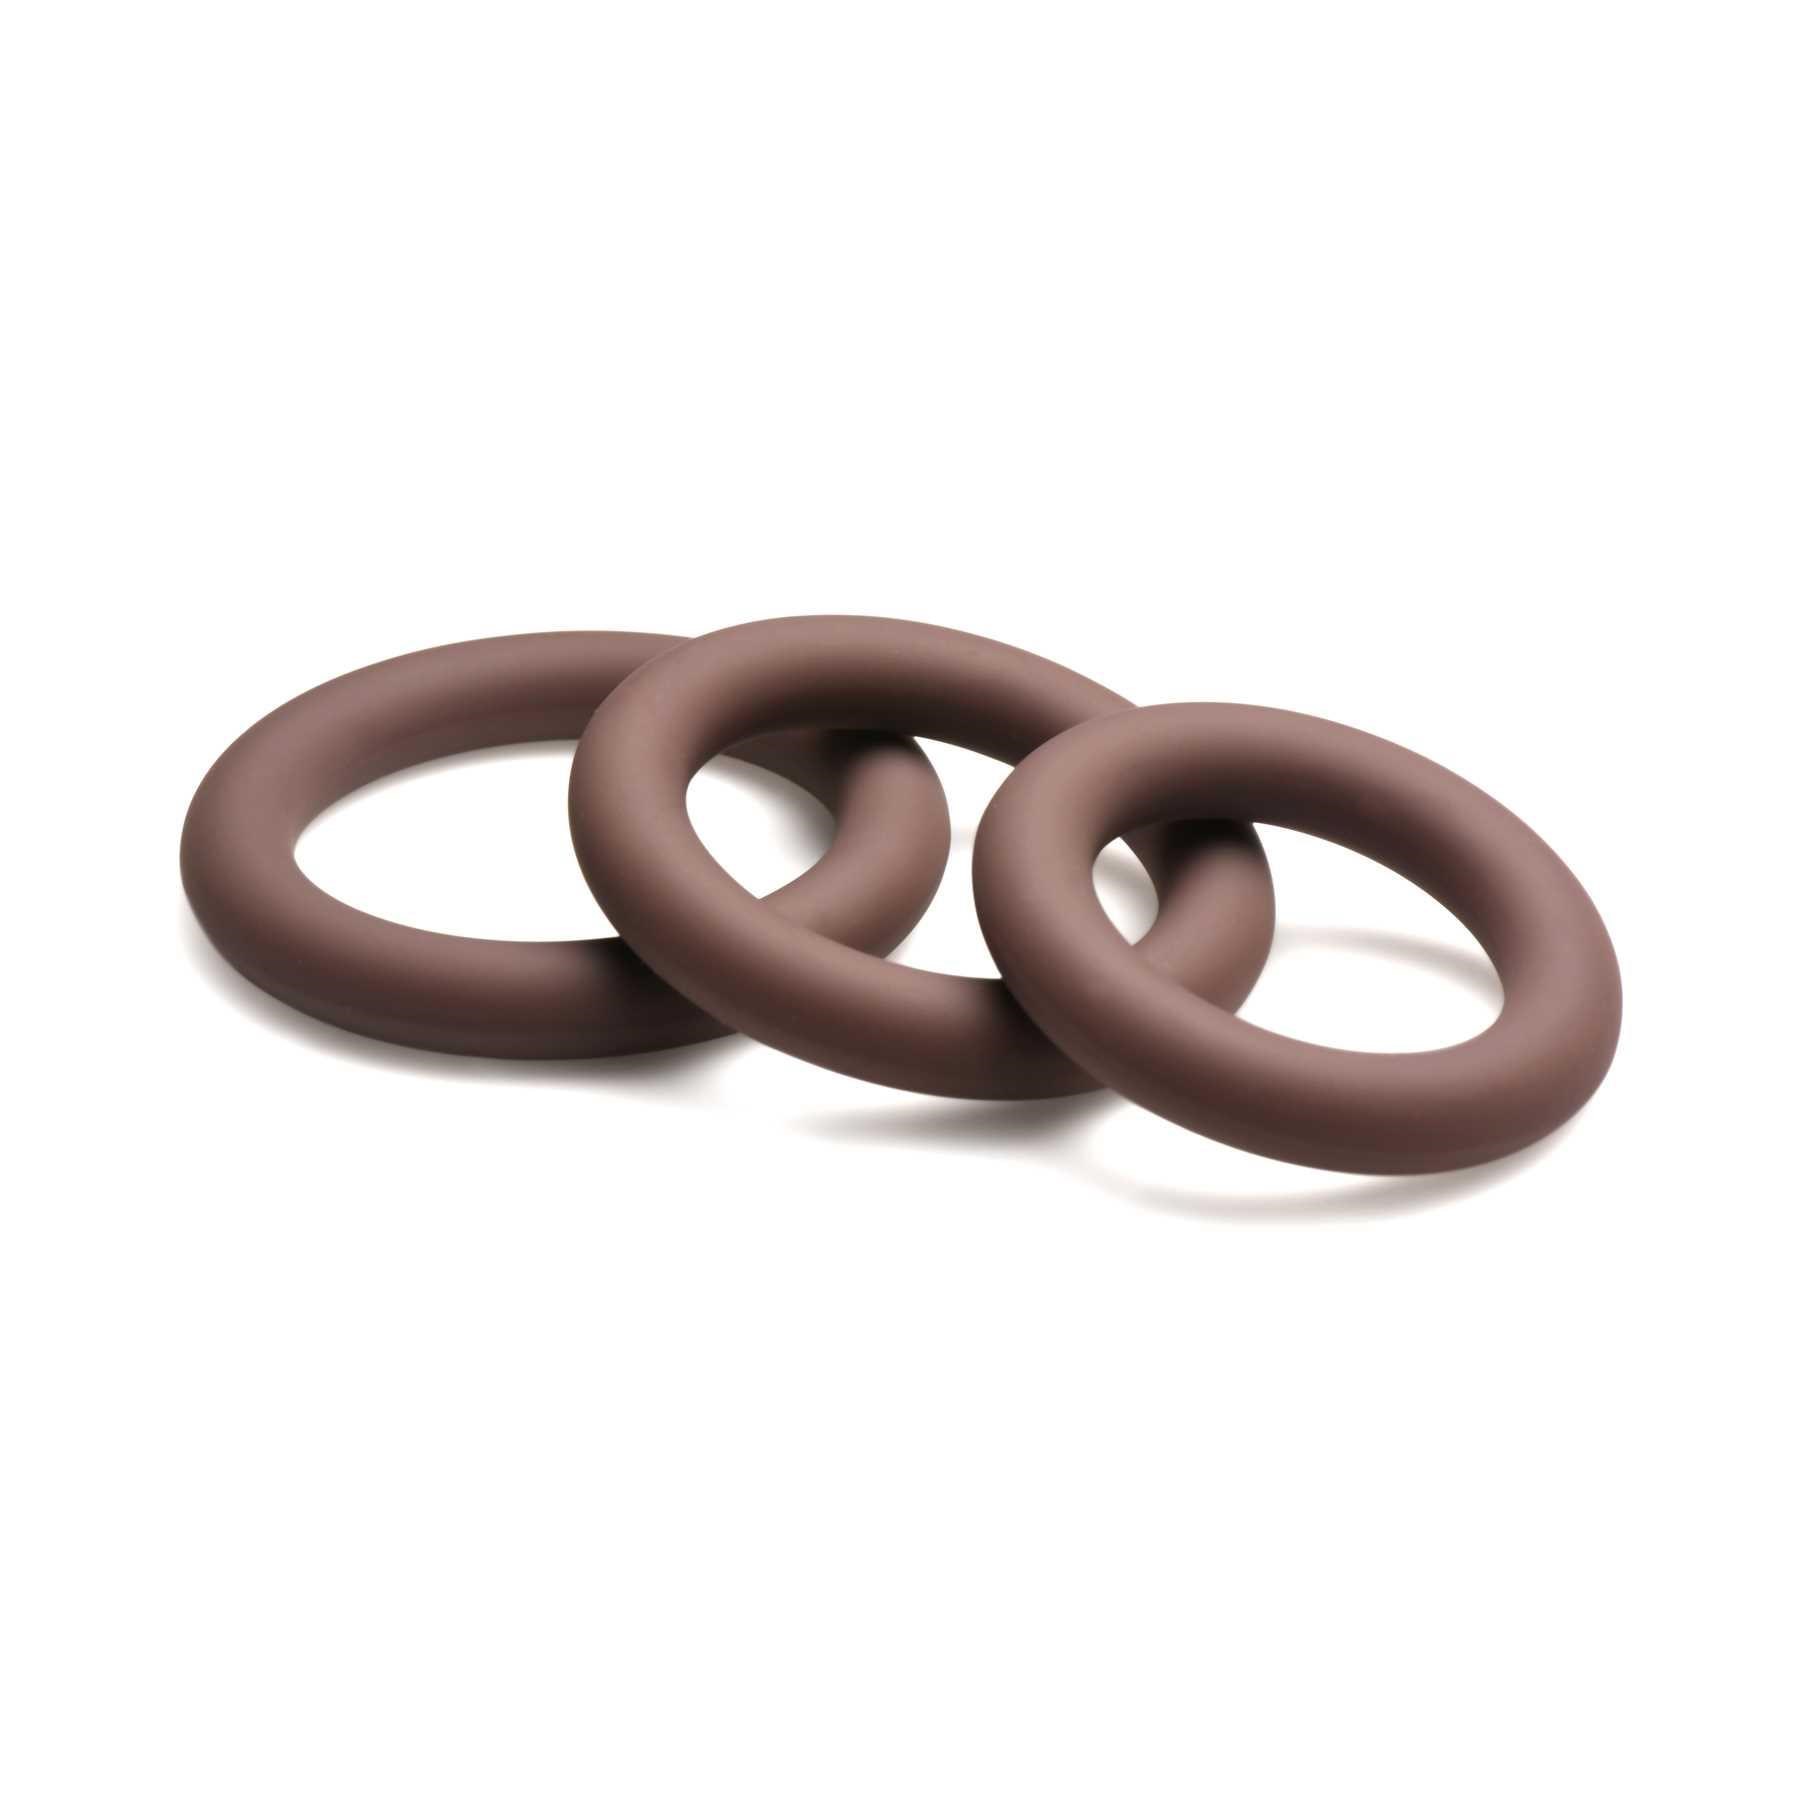 Jock Silicone Cock Ring Set brown